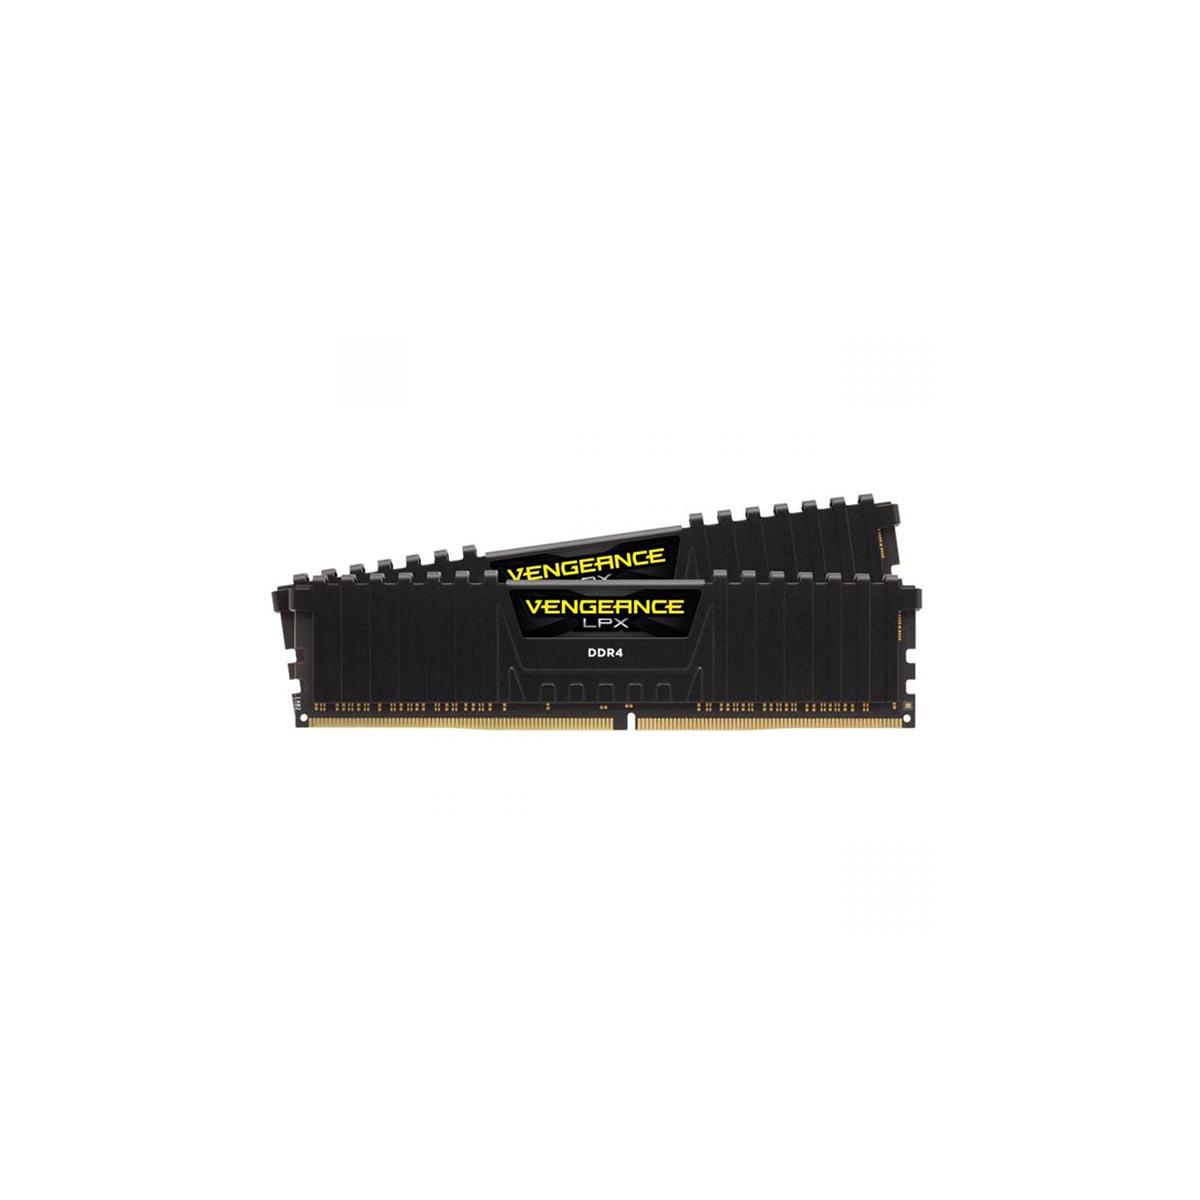 MEMORIA DIMM DDR4 CORSAIR (CMK16GX4M2D3000C16) 16GB 3000MHZ (2X8GB) VENGEANCE LPX, NEGRO - CMK16GX4M2D3000C16